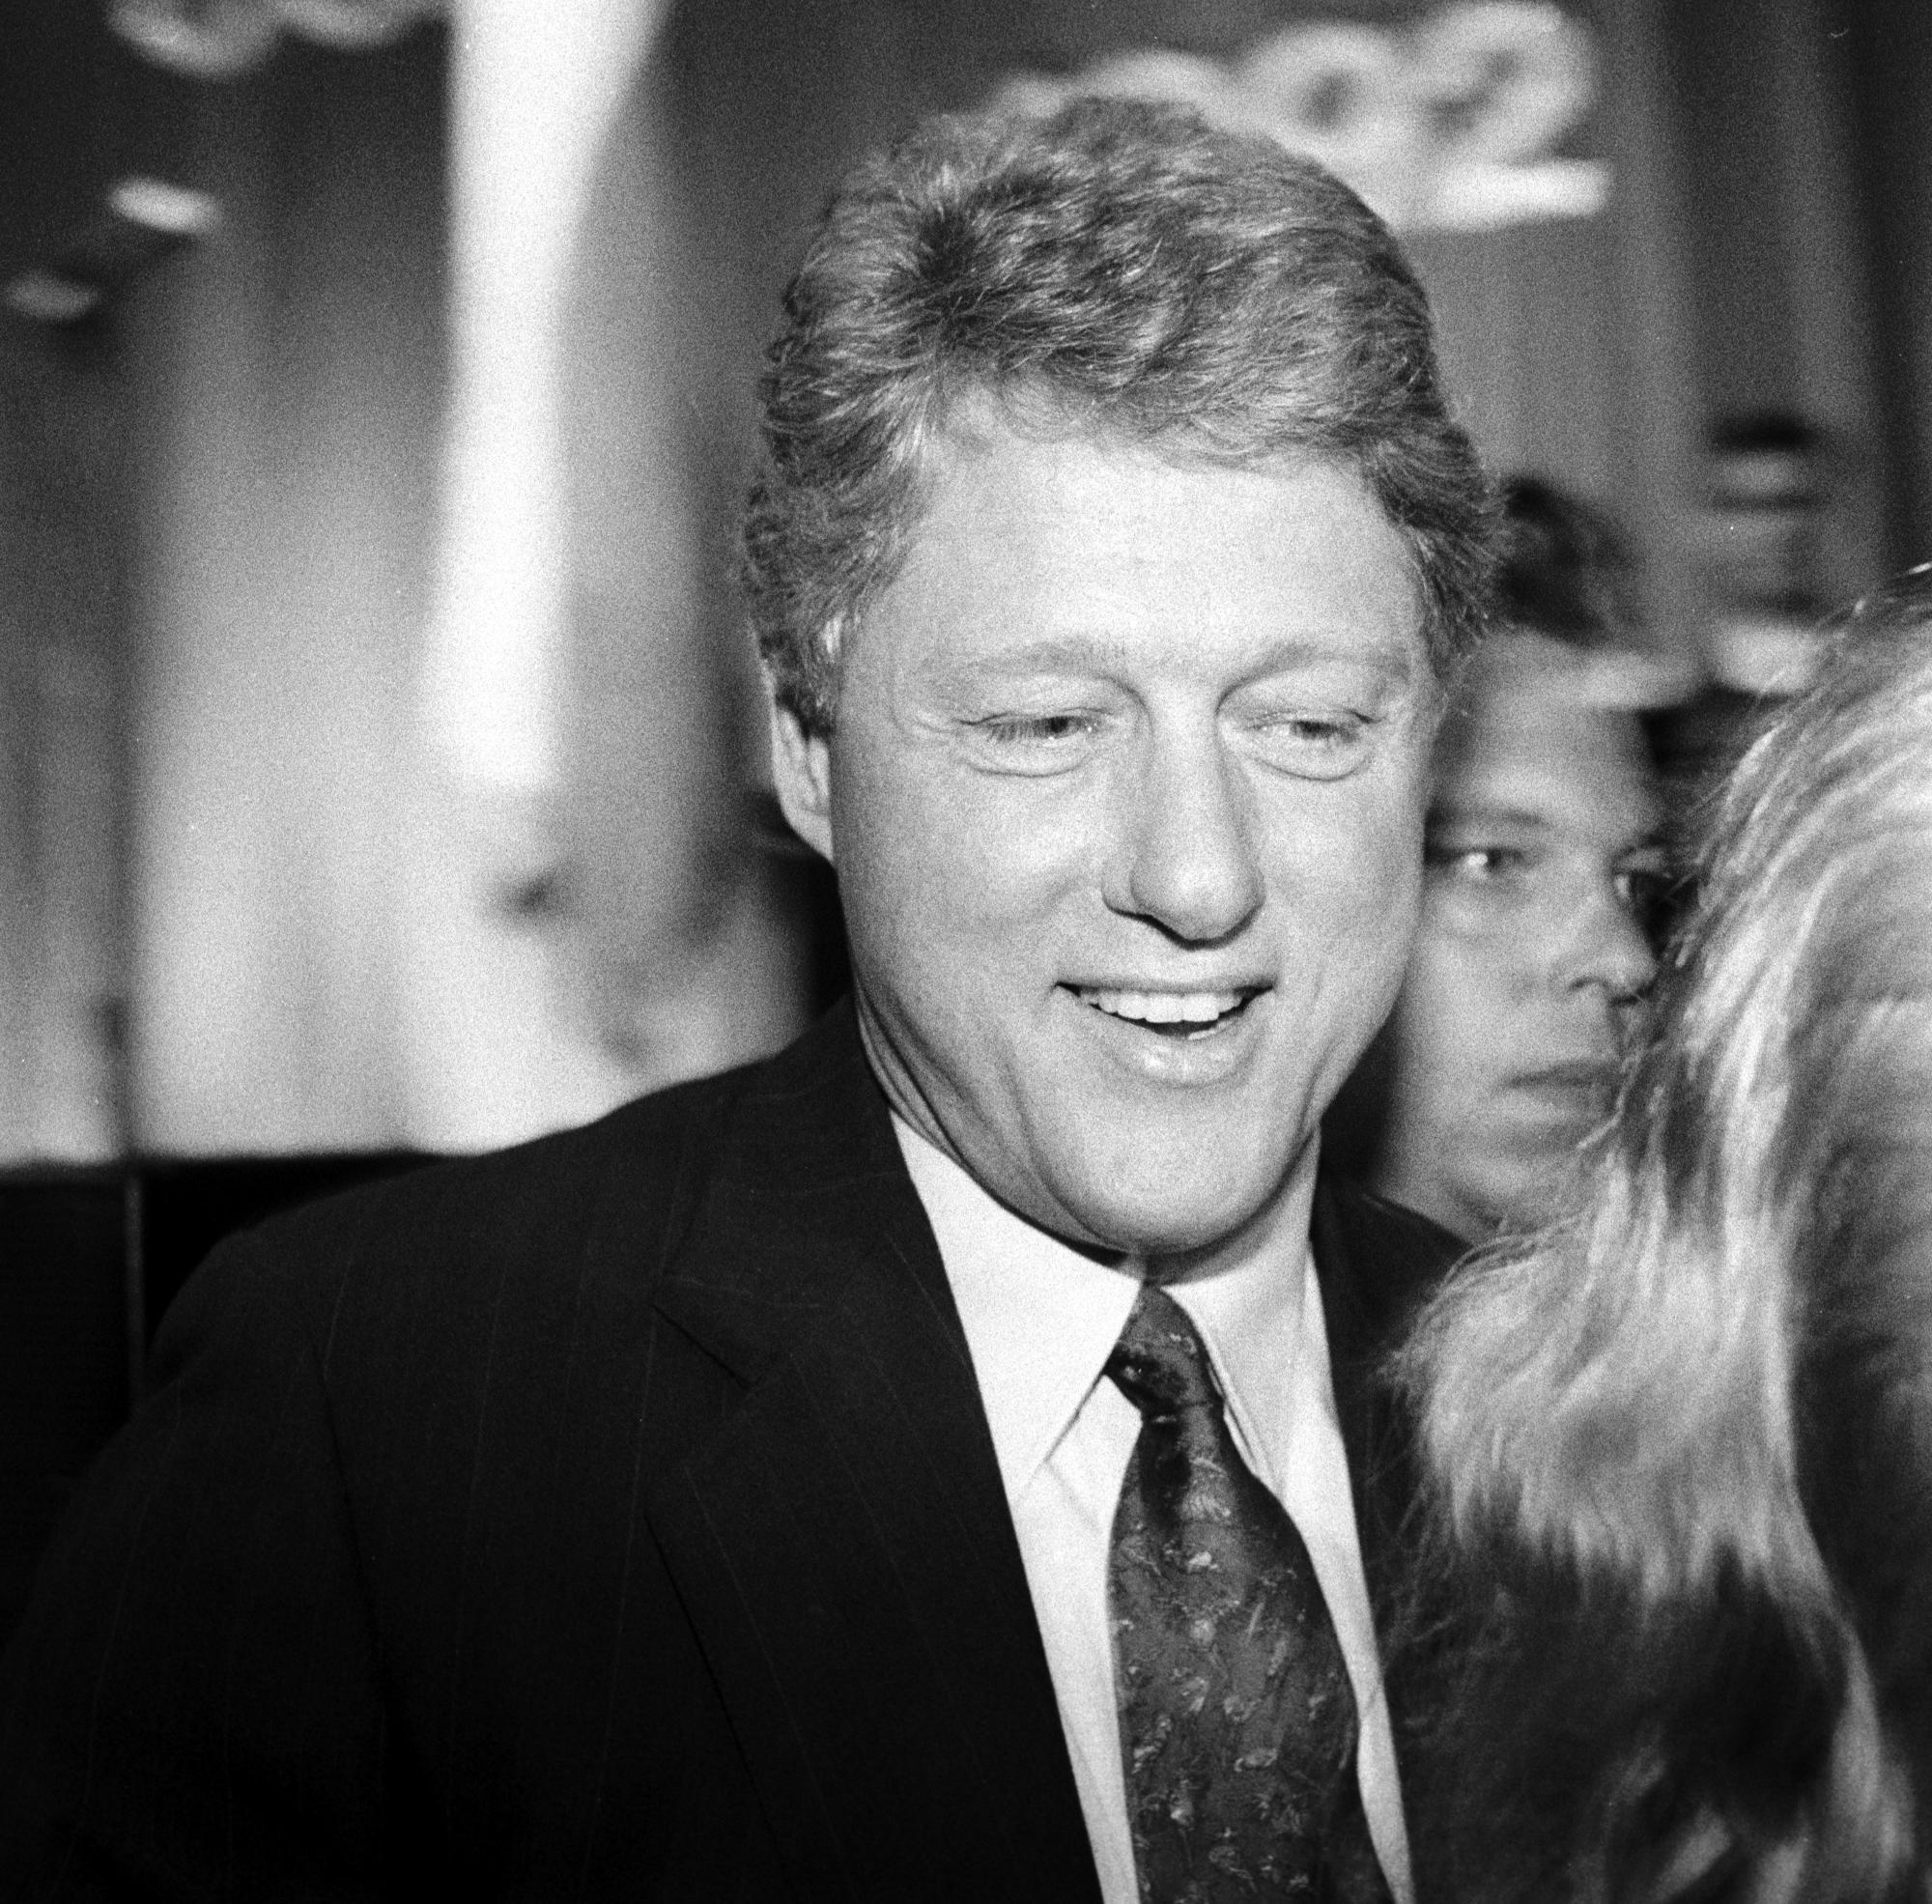 Daily Texan (1991-1992) - Bill Clinton #4